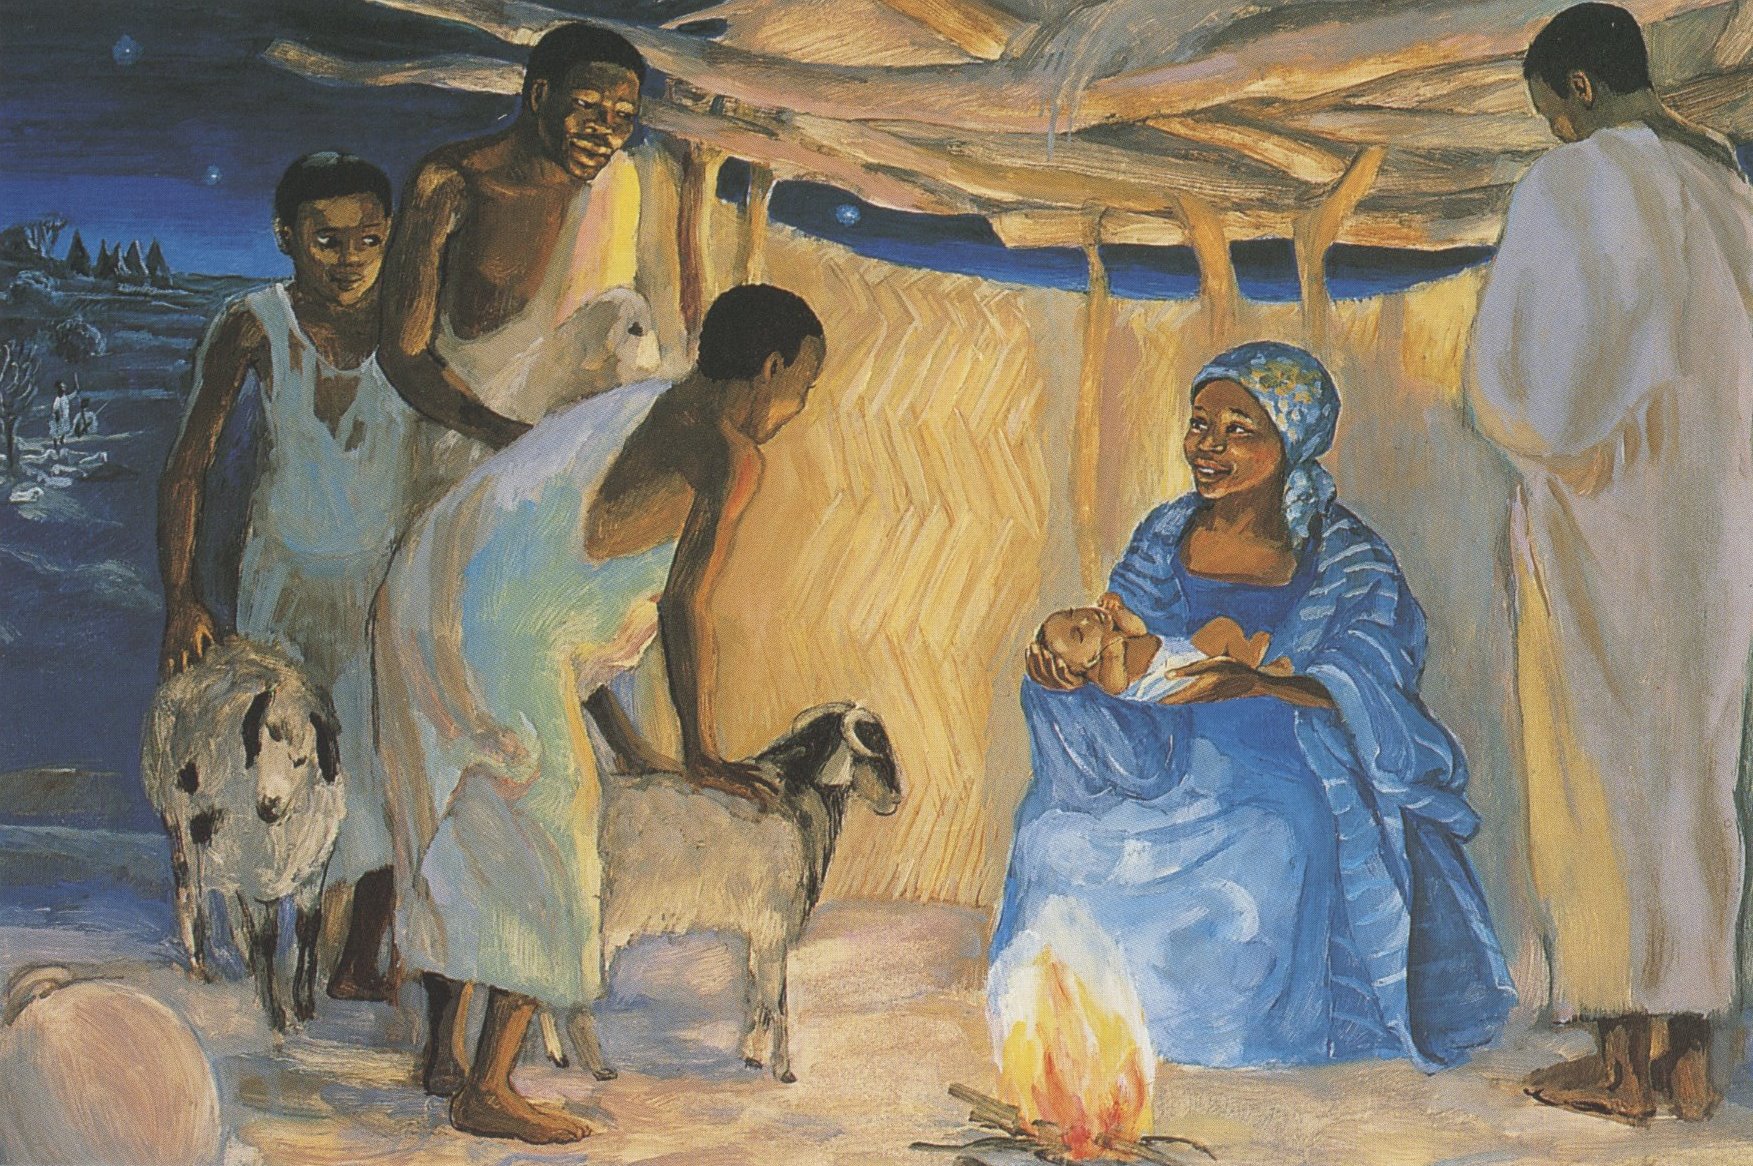 The Birth of Jesus - Luke 2:1-20